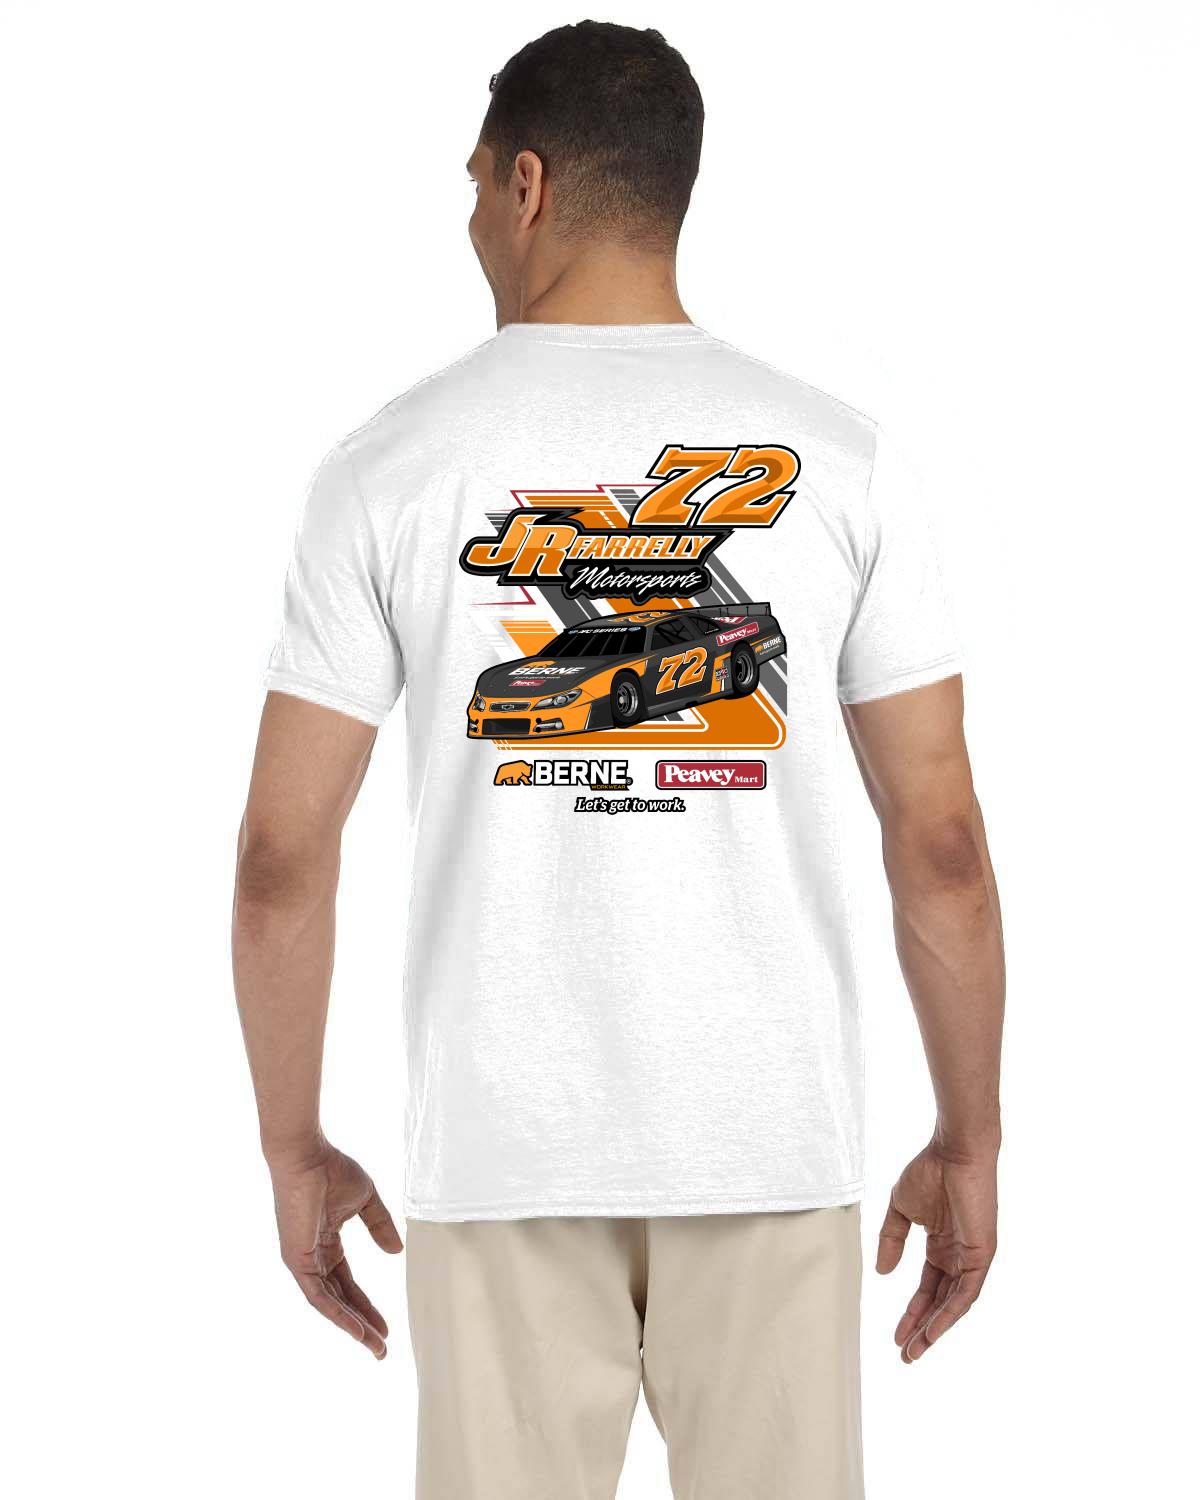 Jr. Farrelly Motorsports / BERNE-Peavey Racing Men's T-shirt